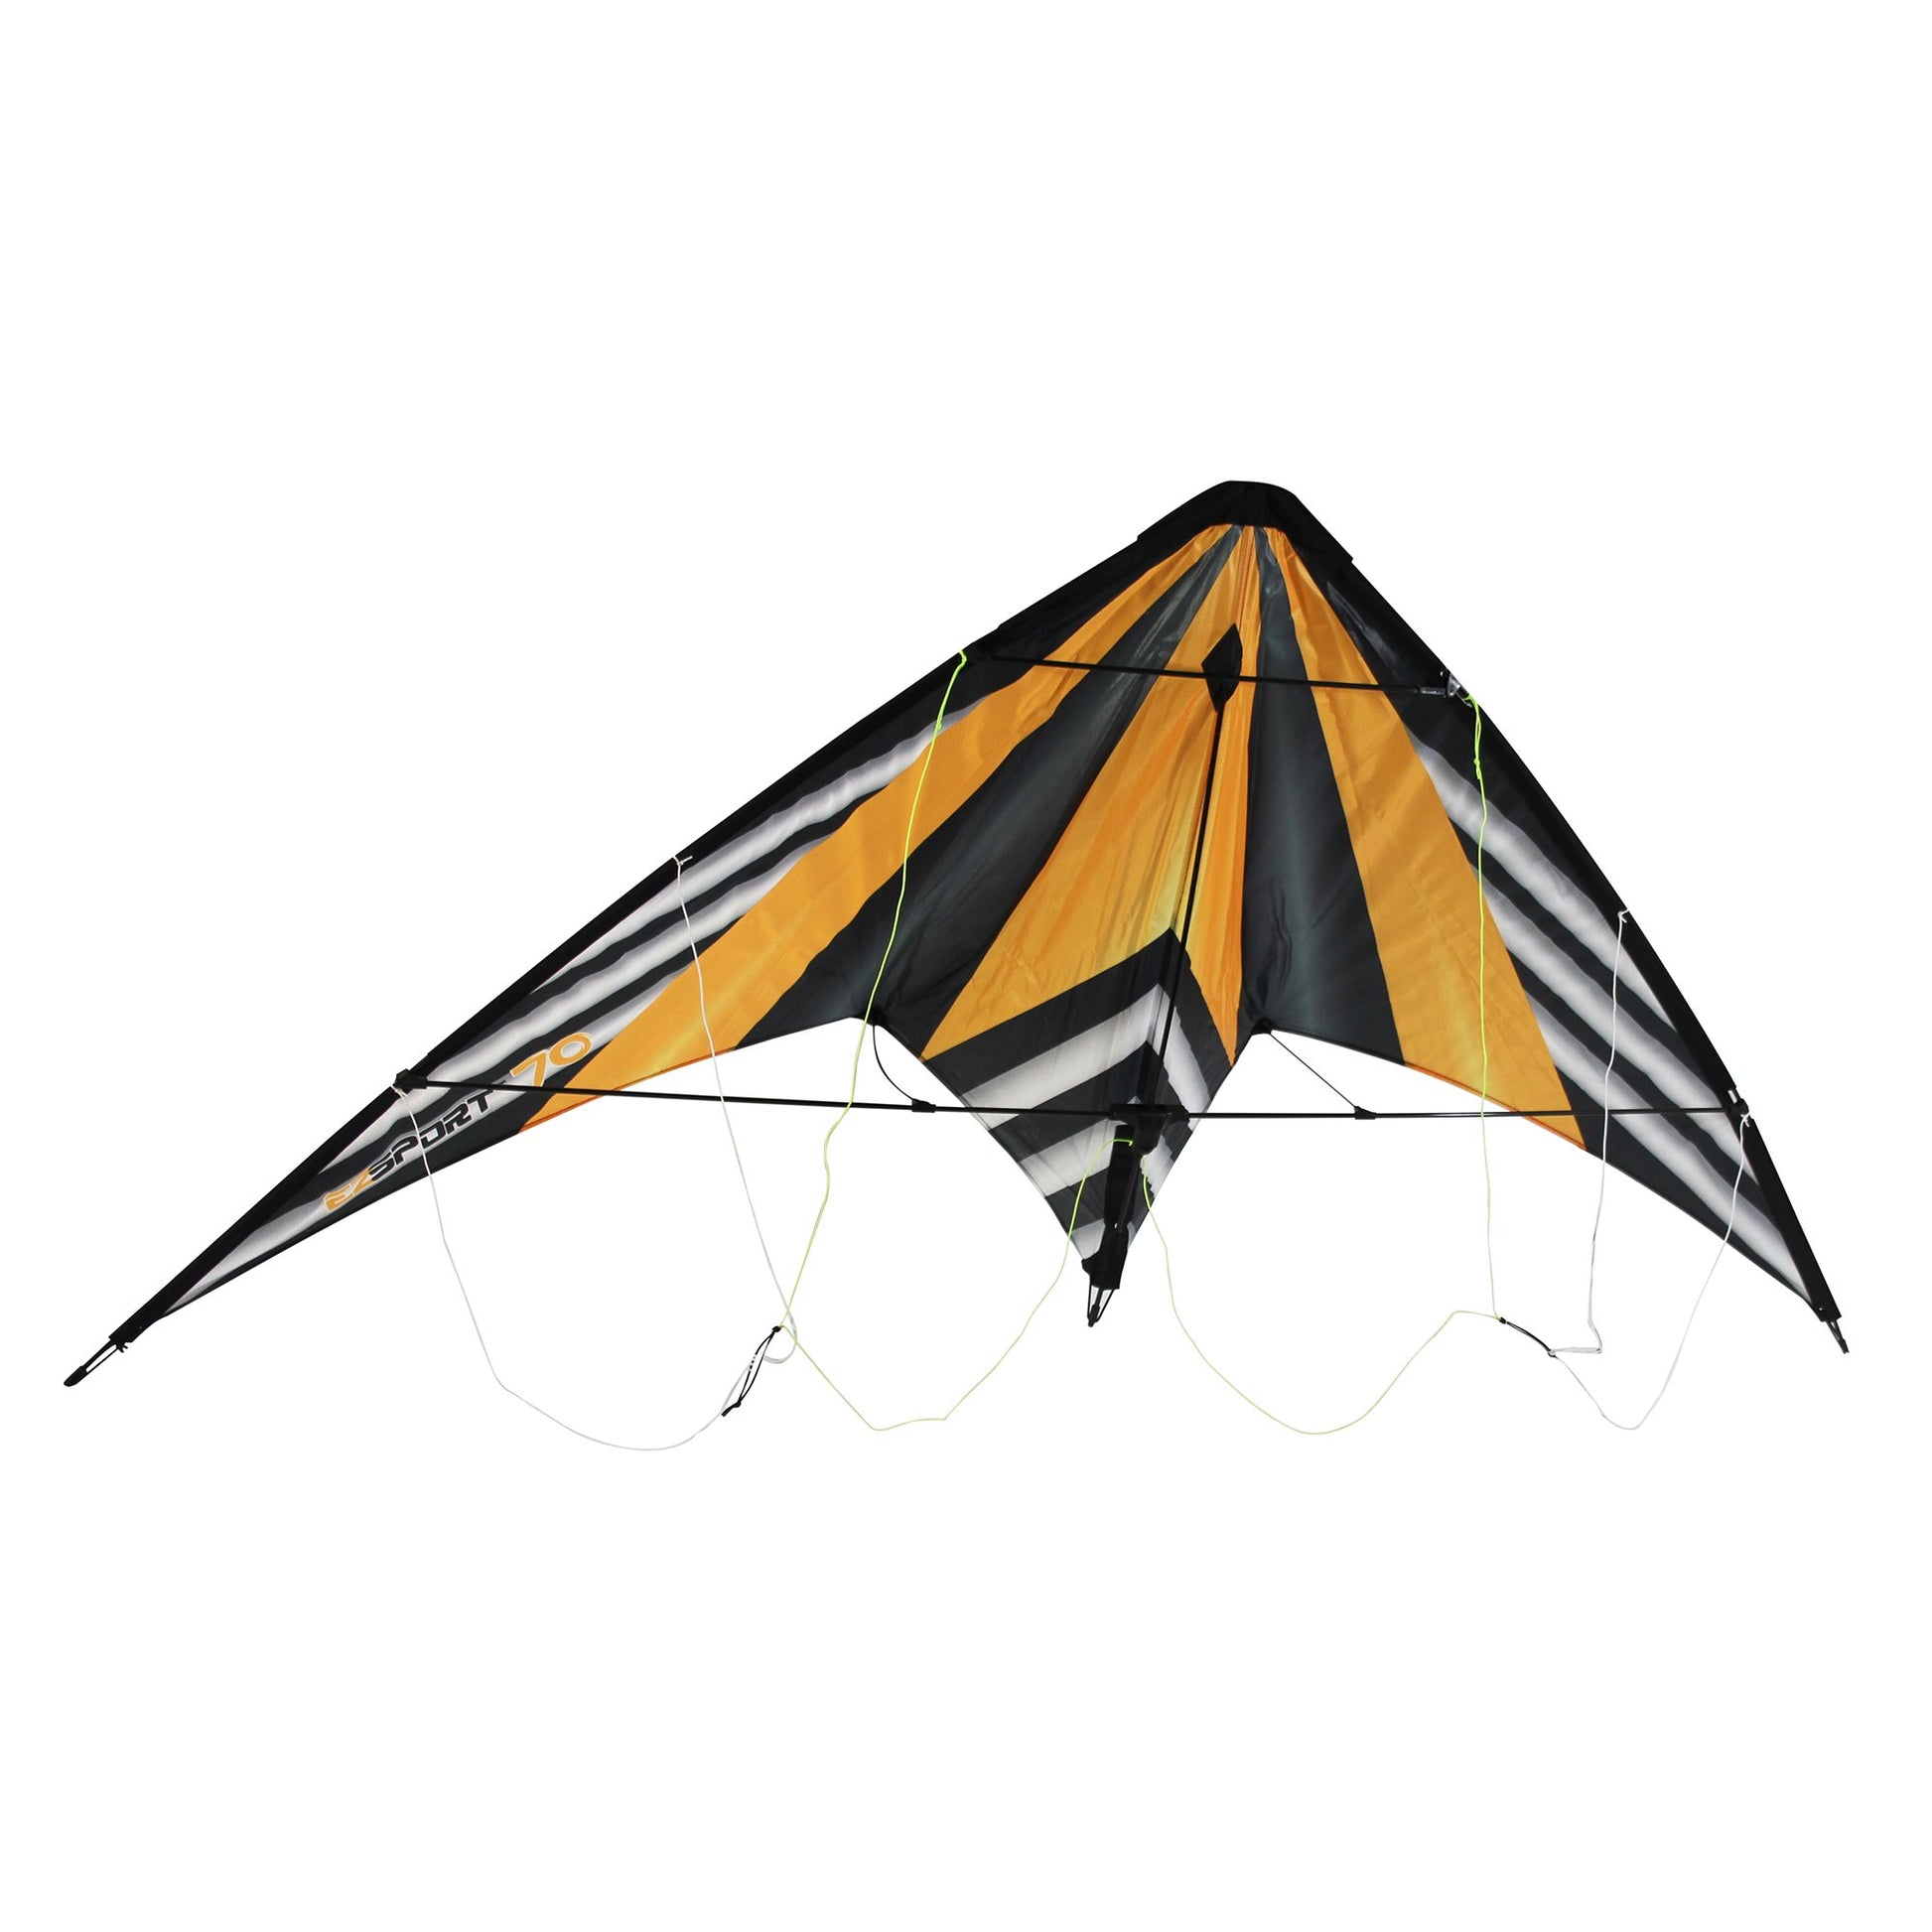 WindNSun EZ Sport 70 Dual Control Sport Kite Yellow Stripe Nylon Kite Product Image